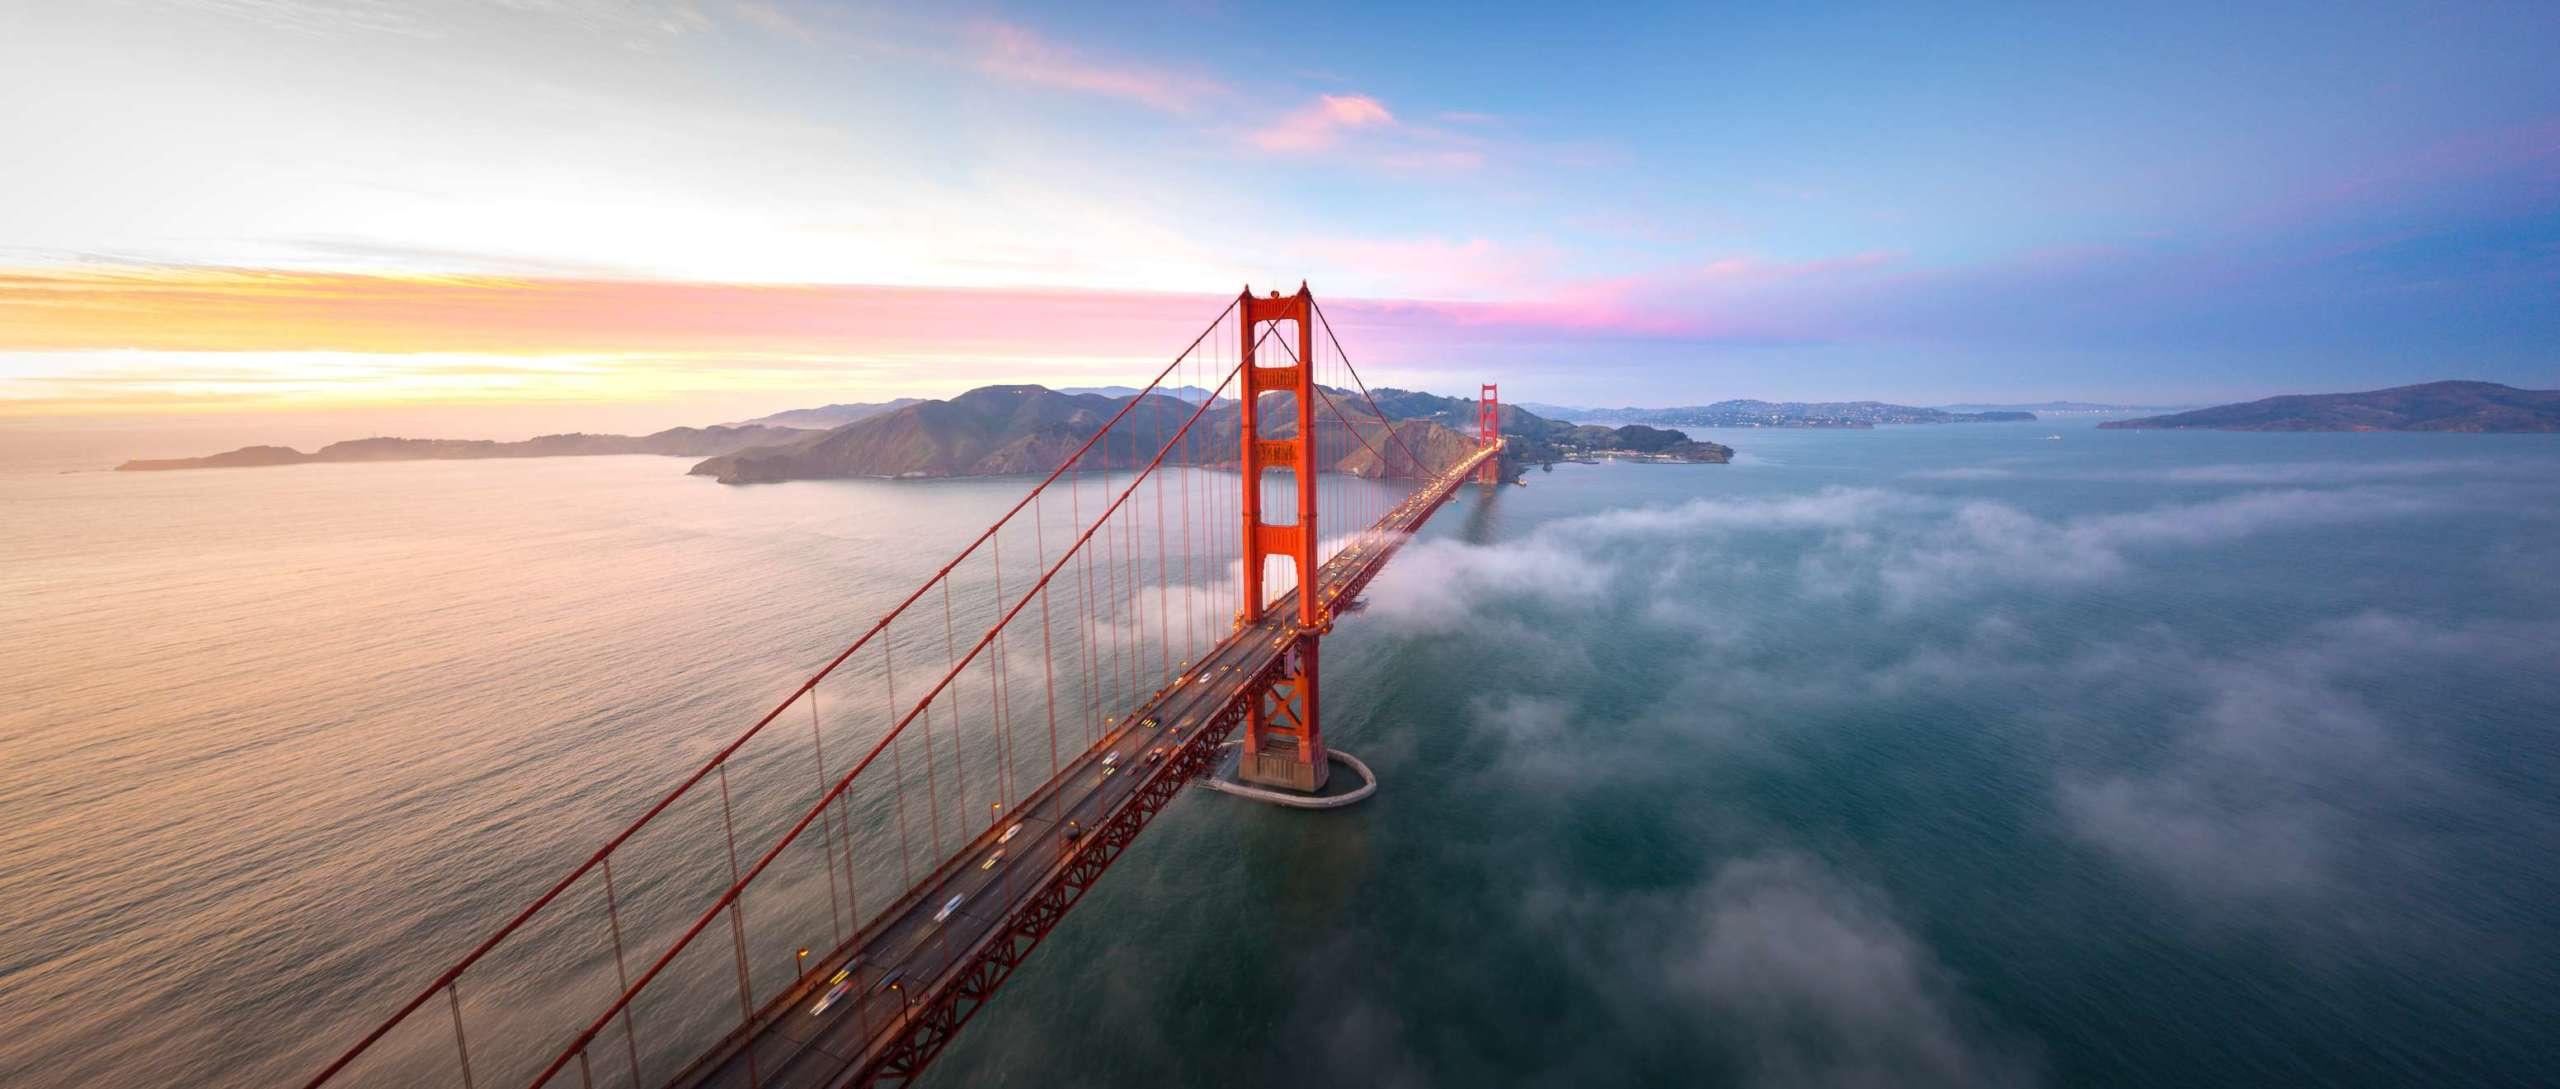 Golden Gate Bridge bei Sonnenuntergang Luftbild, San Francisco, Kalifornien